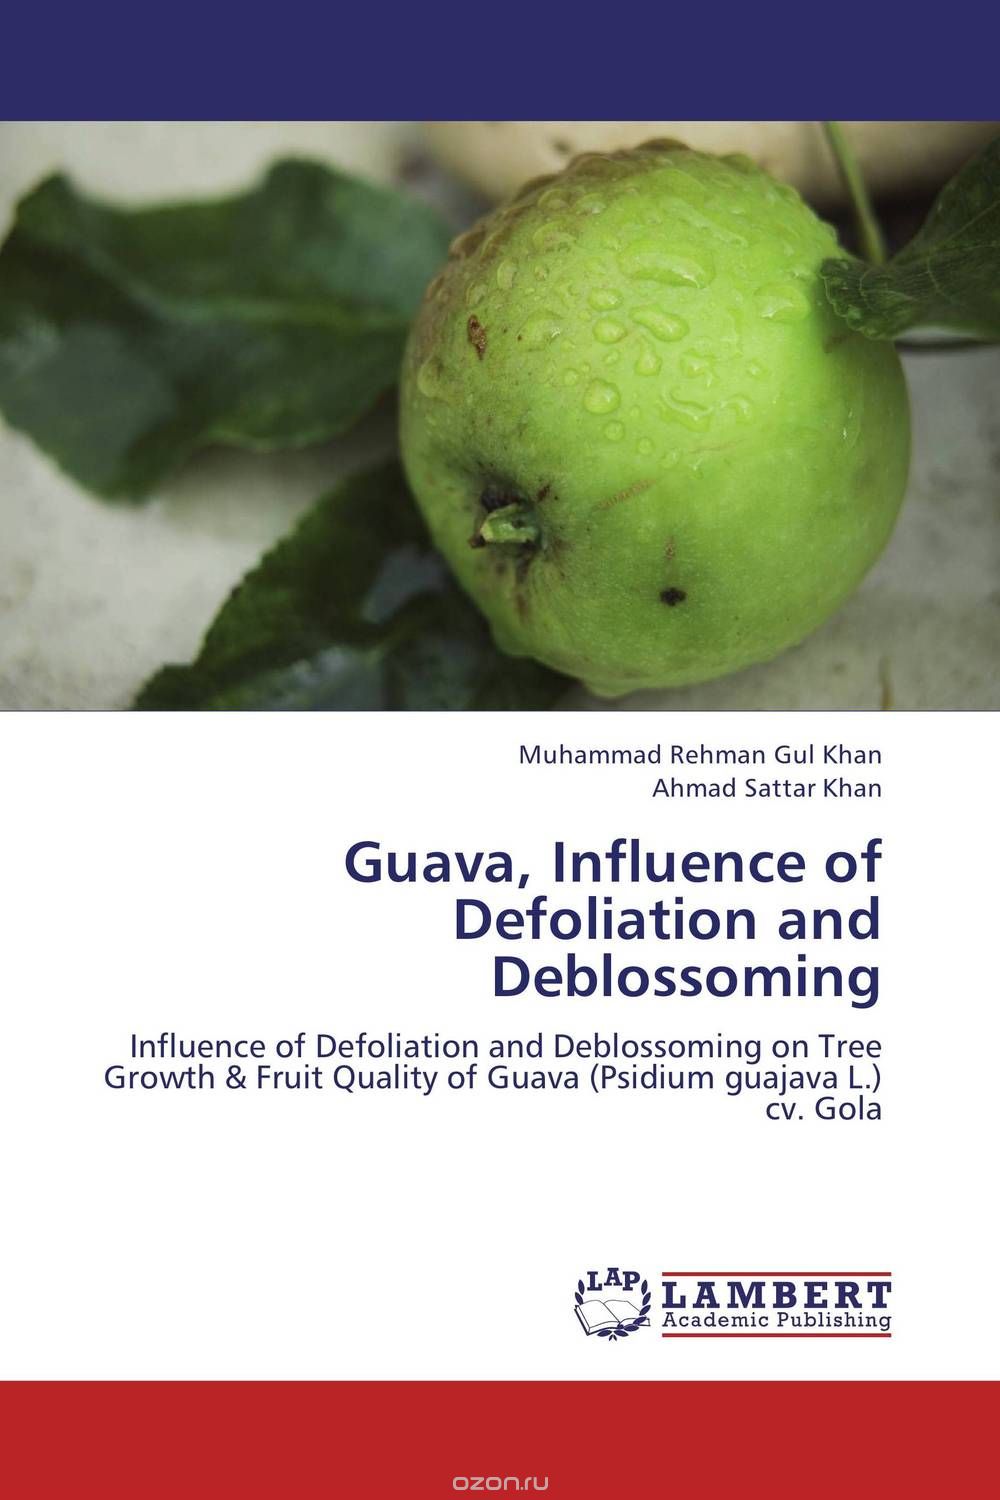 Скачать книгу "Guava, Influence of Defoliation and Deblossoming"